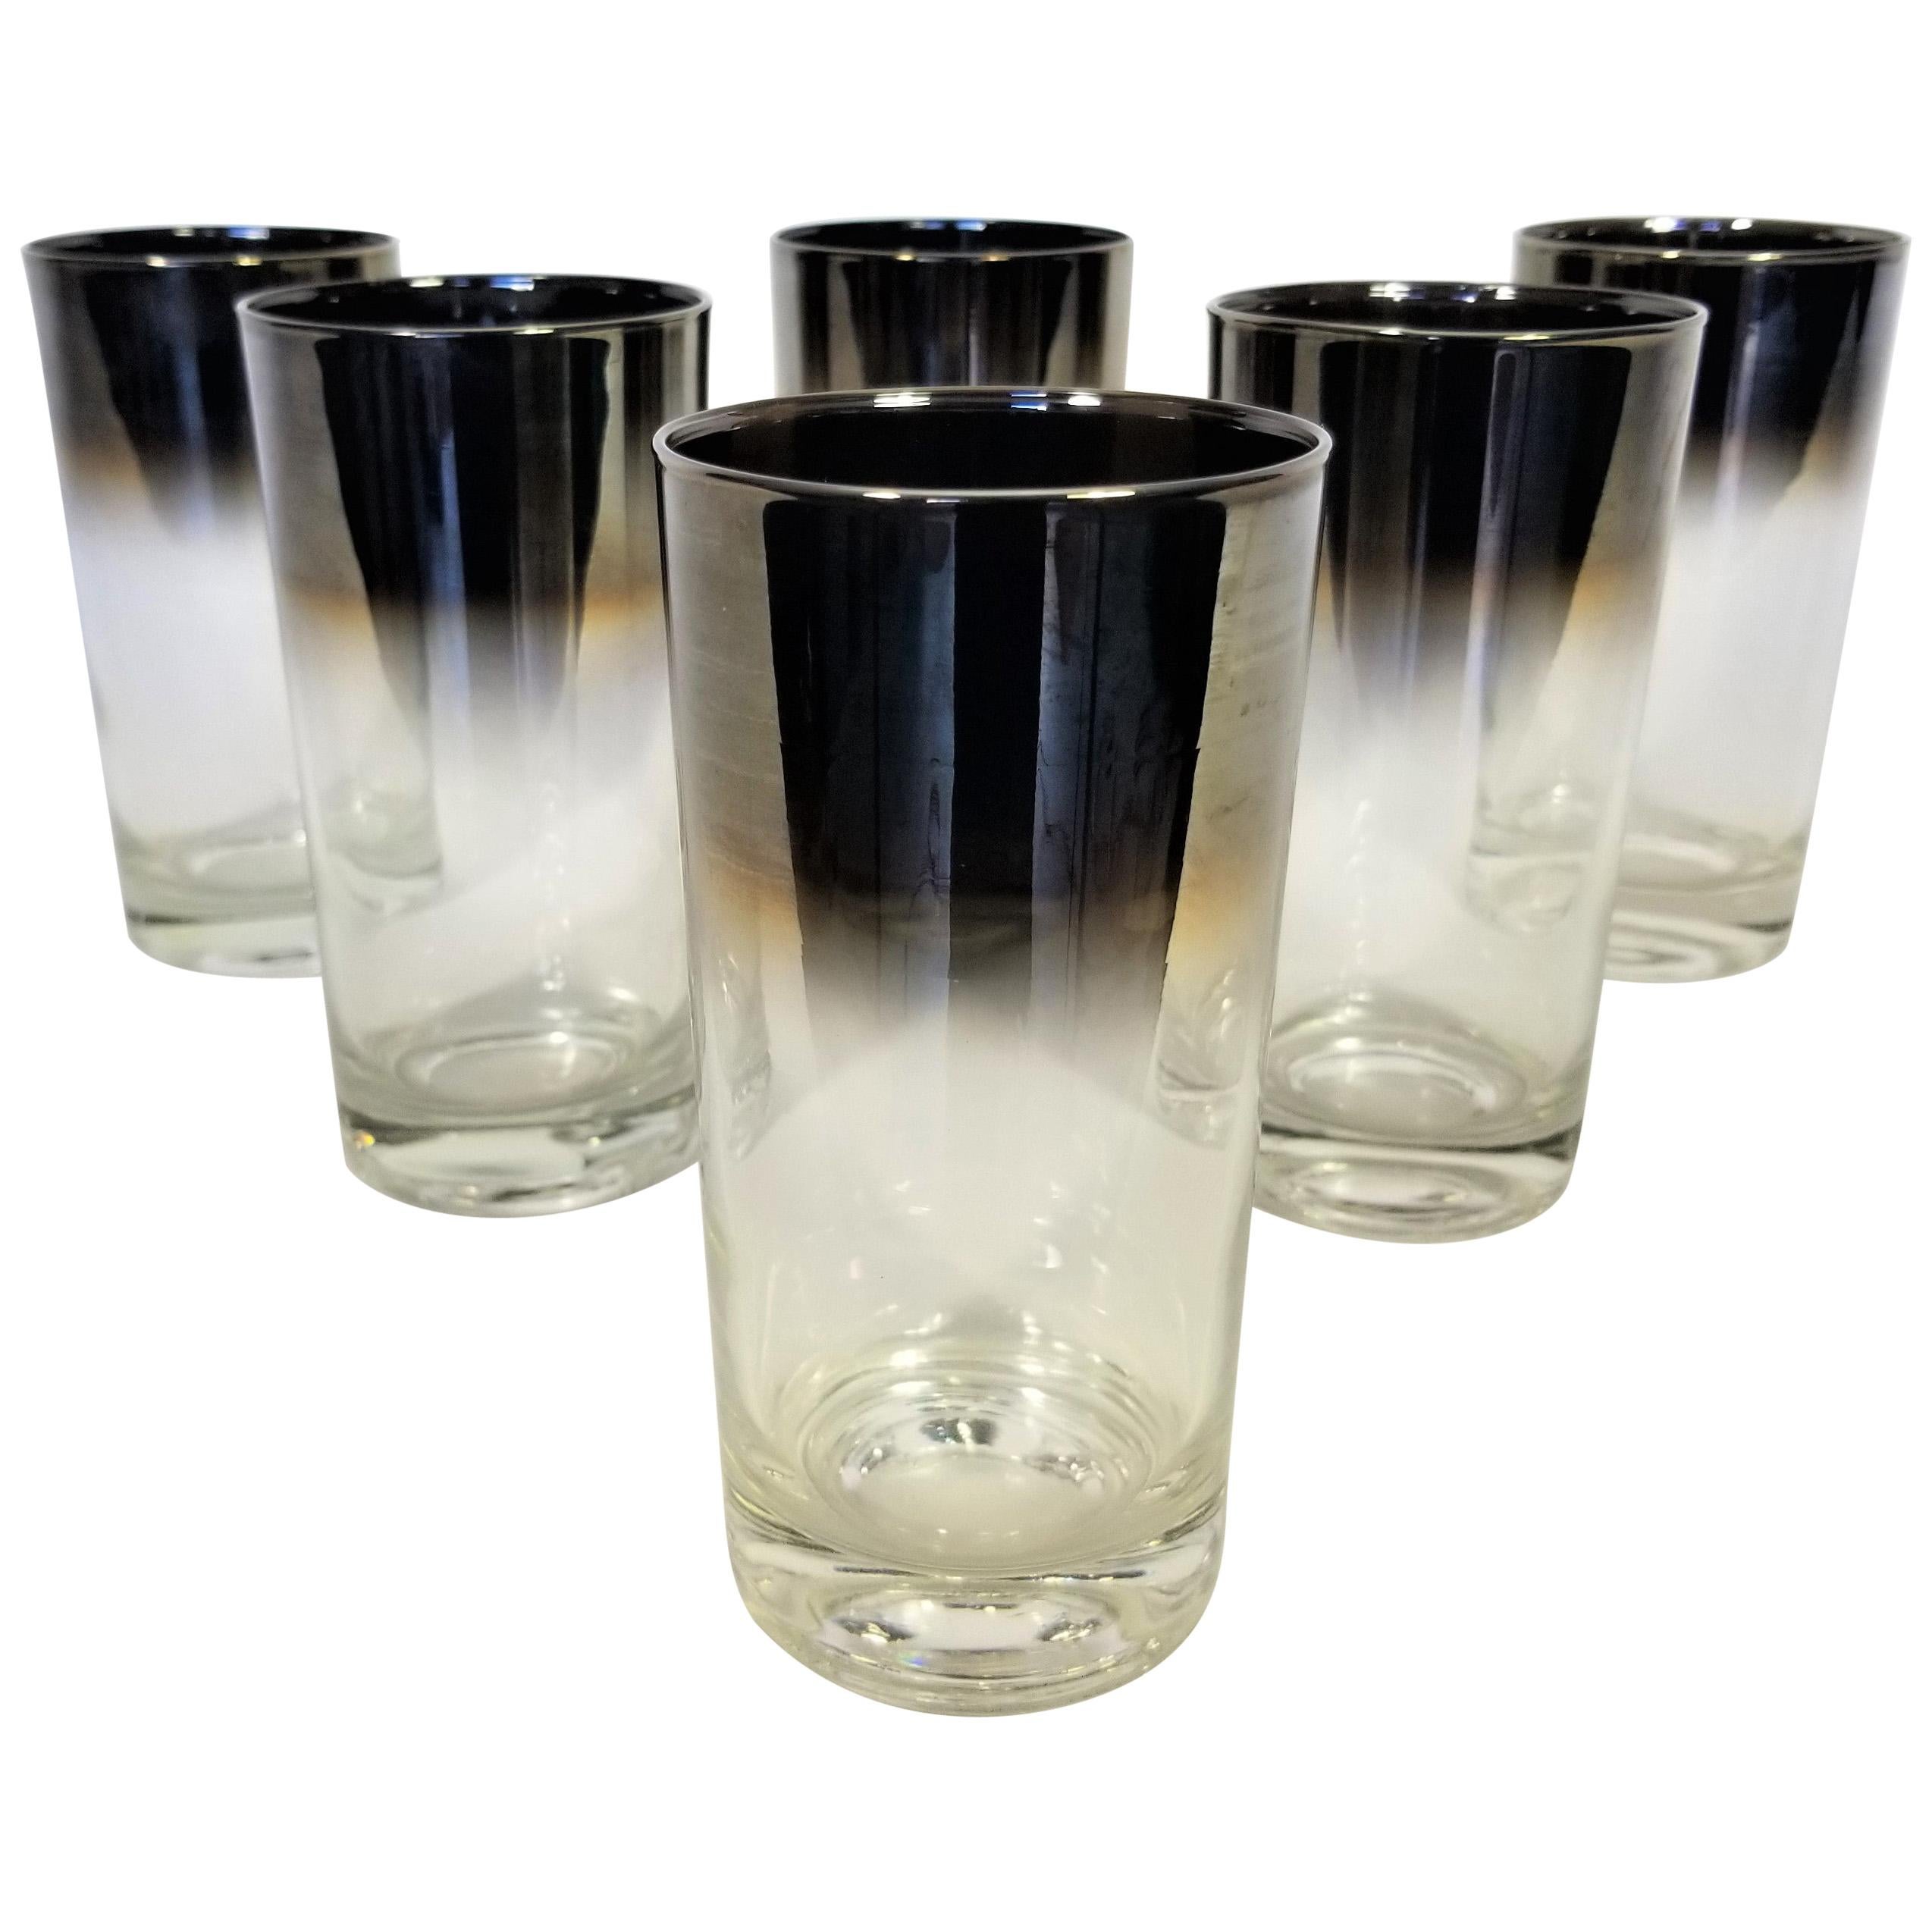 Dorothy Thorpe Midcentury Silver Fade Barware Glassware Set of 6